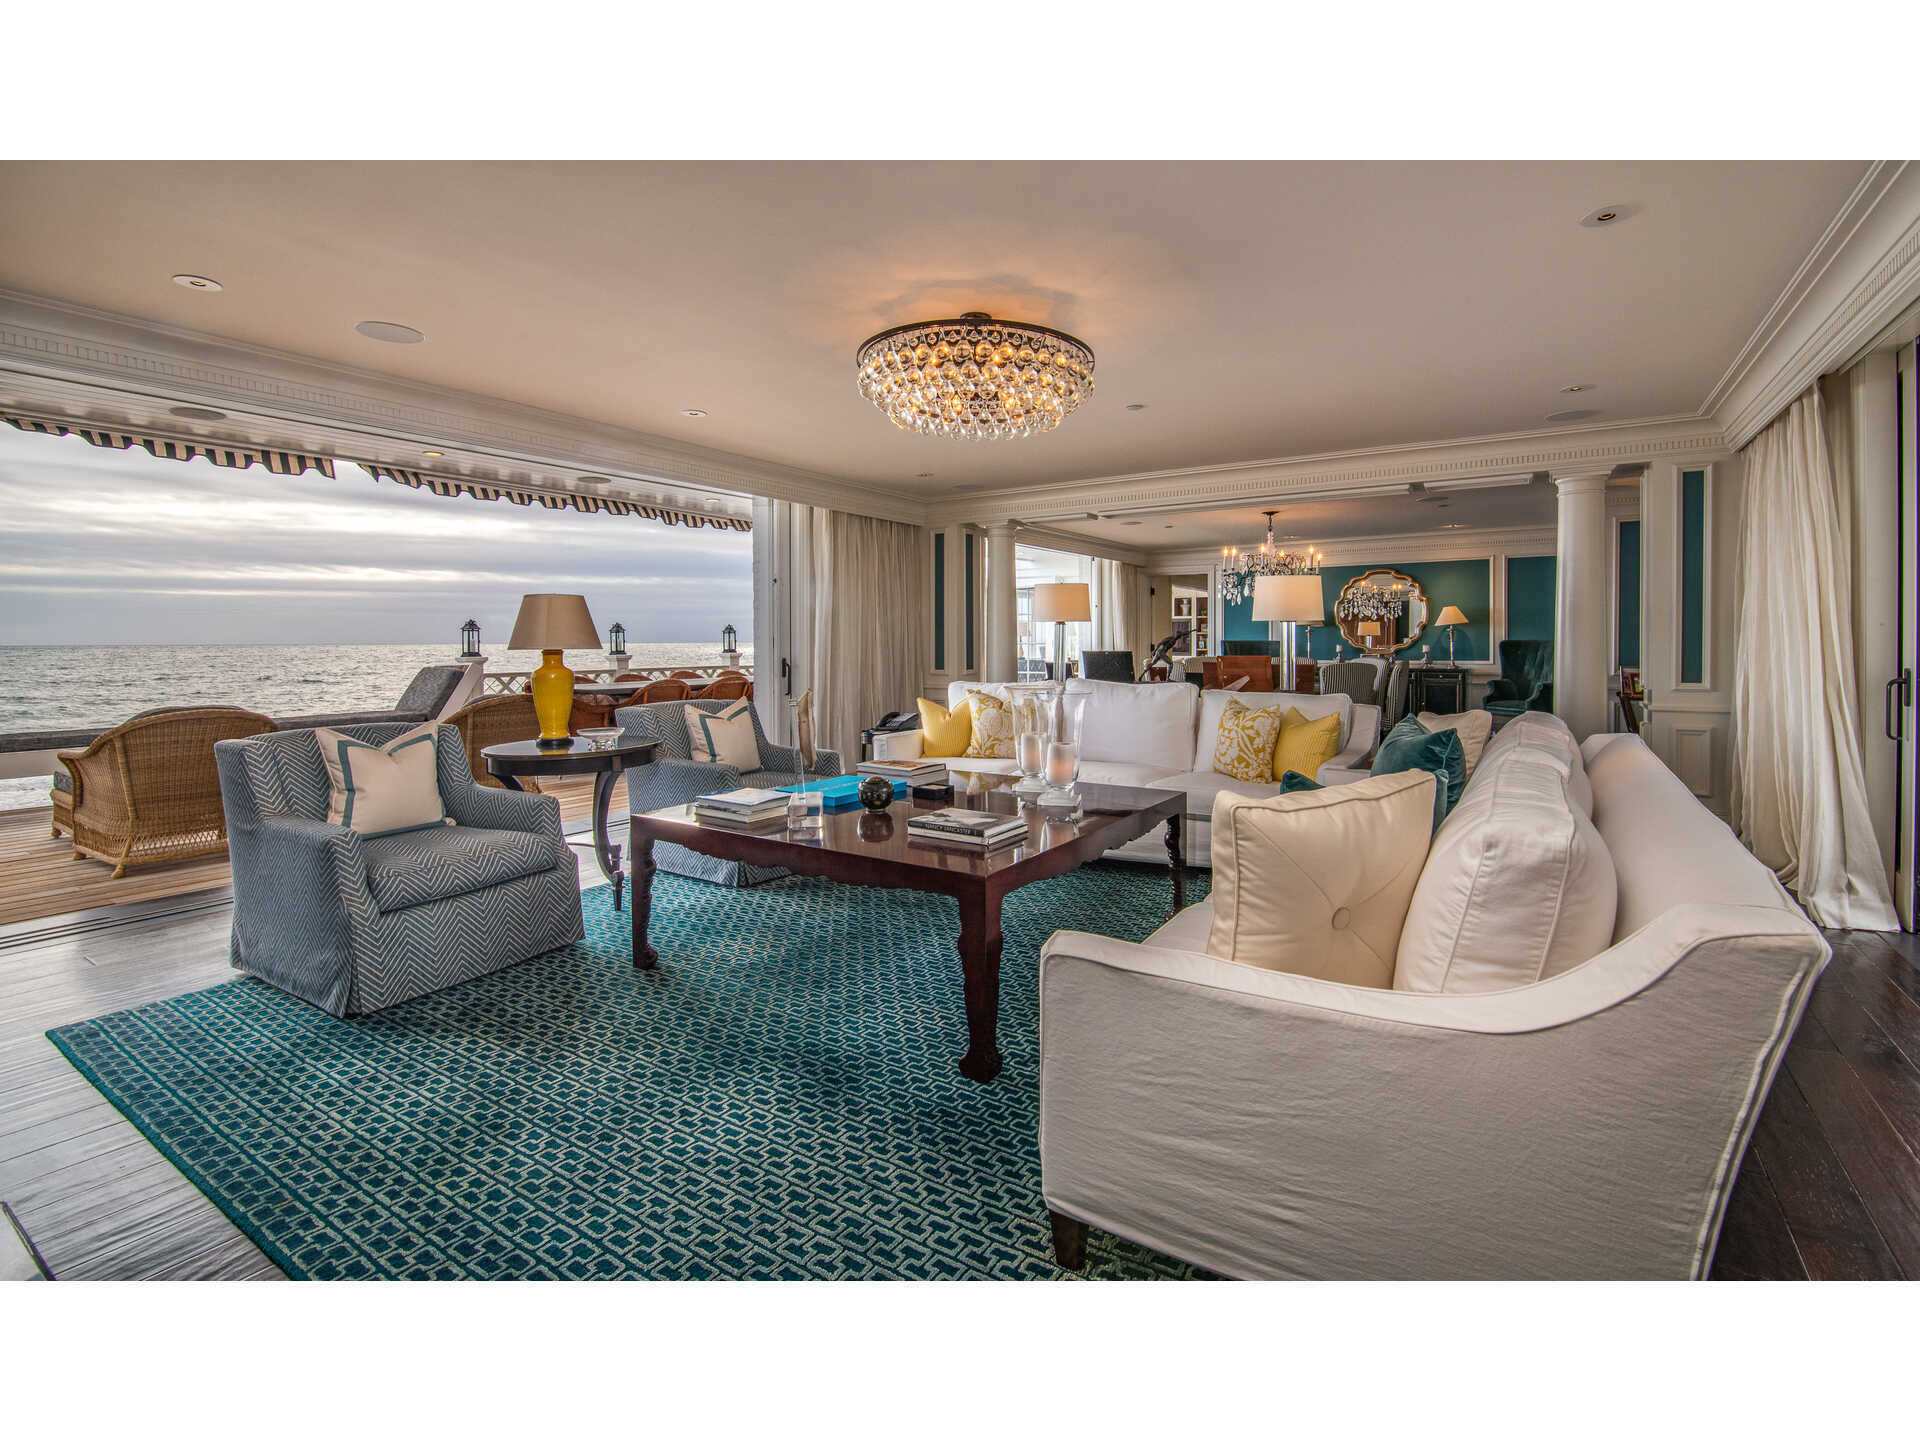 Francis York A Resort Developer’s Oceanfront Malibu Mansion1.jpg